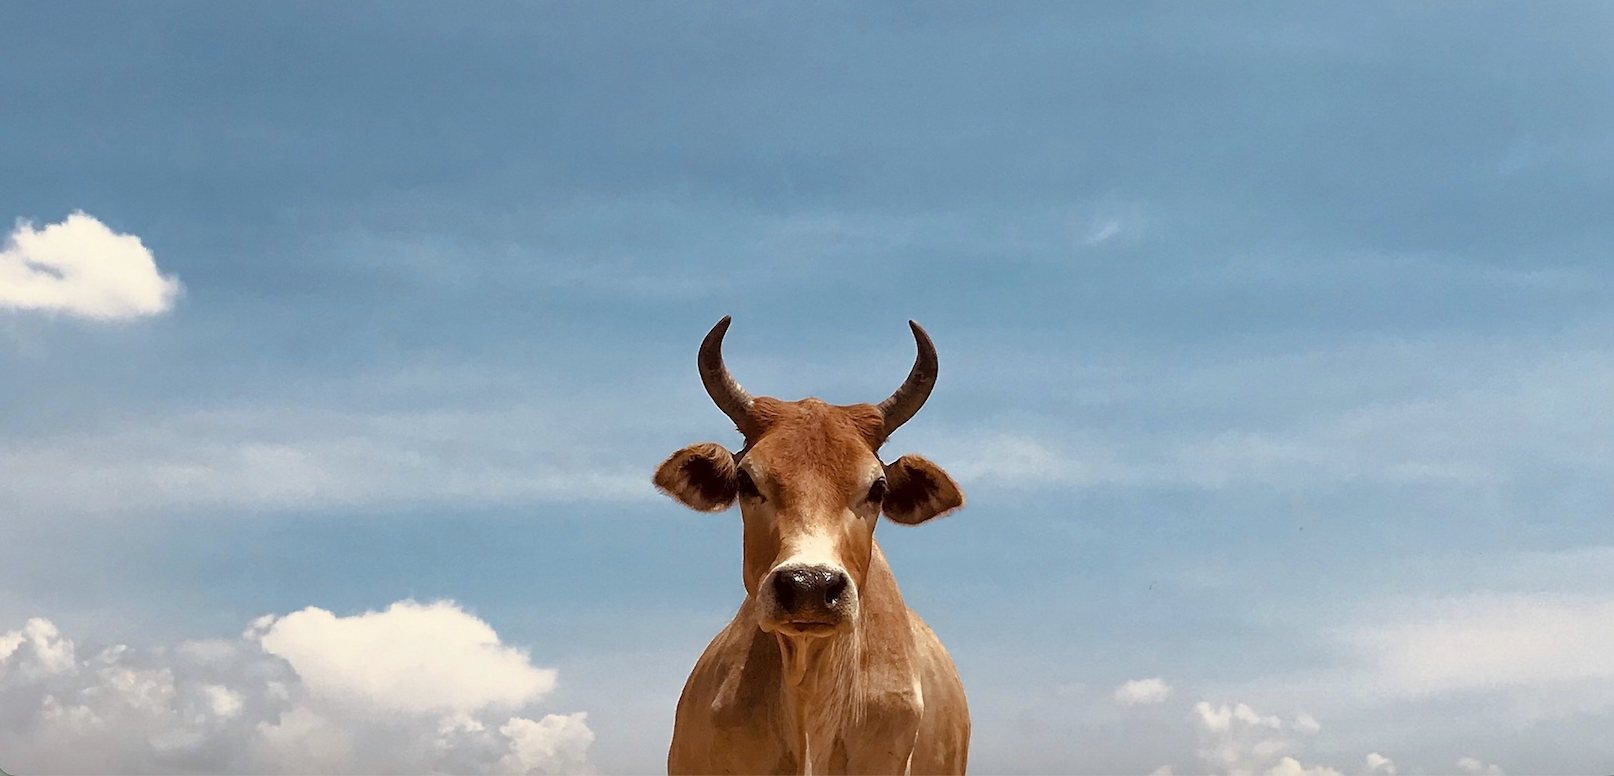 Cow against a blue sky